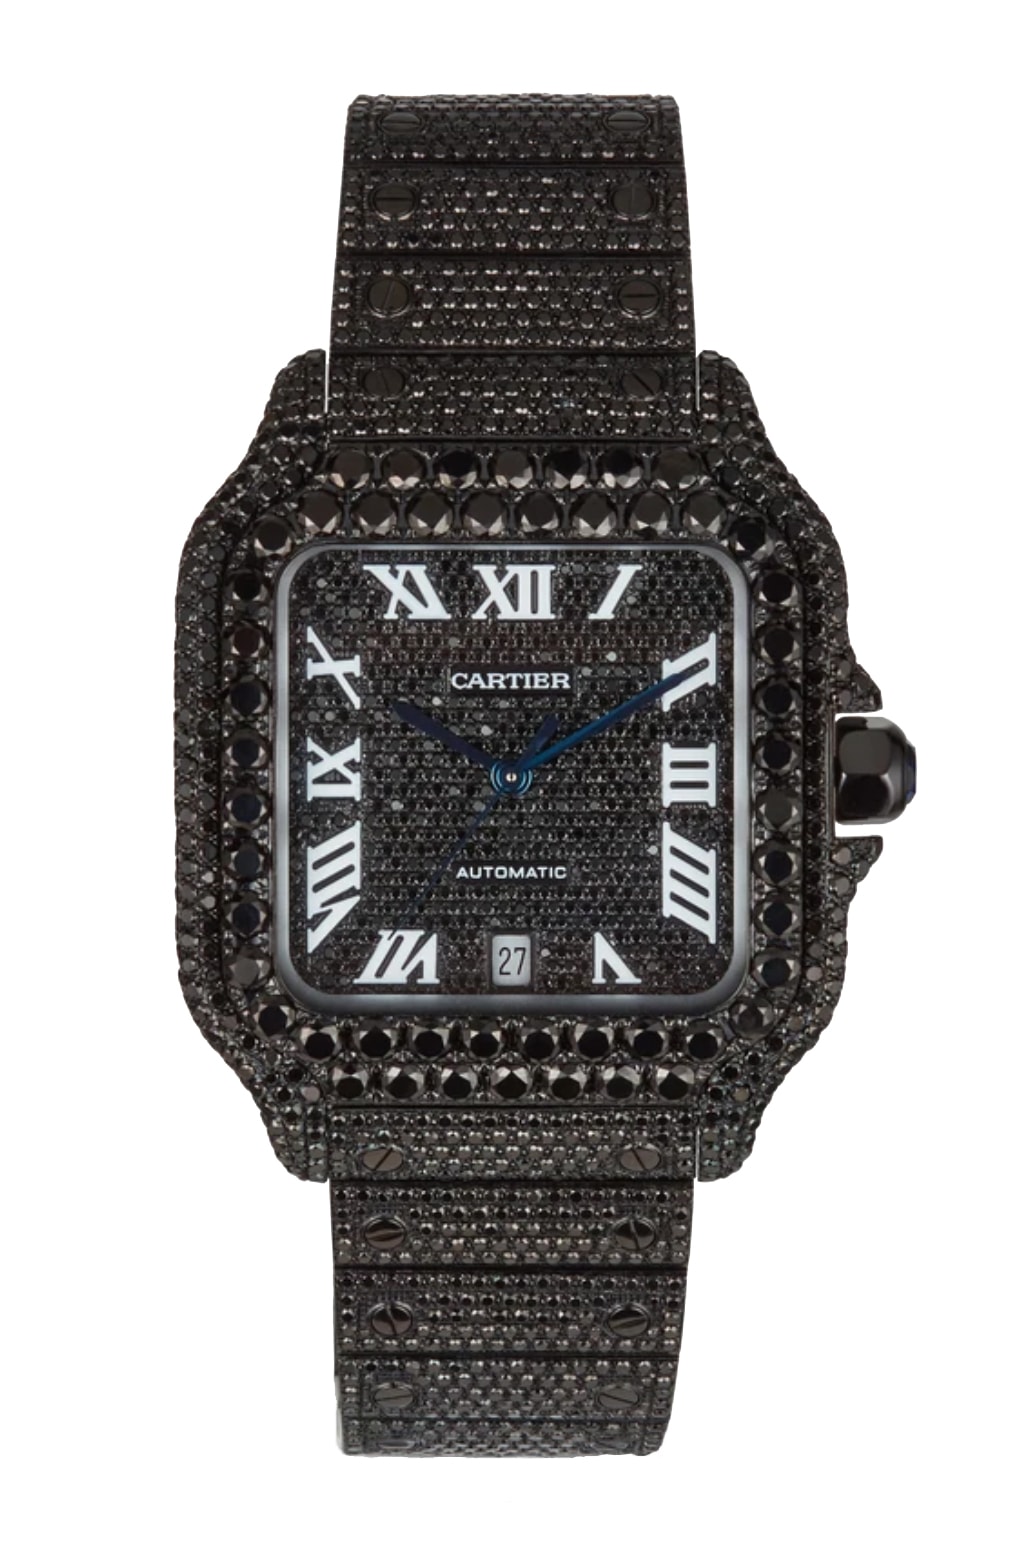 Private Label Bust Down Iced Out Diamond Watches Time Pieces Dover Street Market London Expensive Rolex Cartier Audemars Piguet AP 